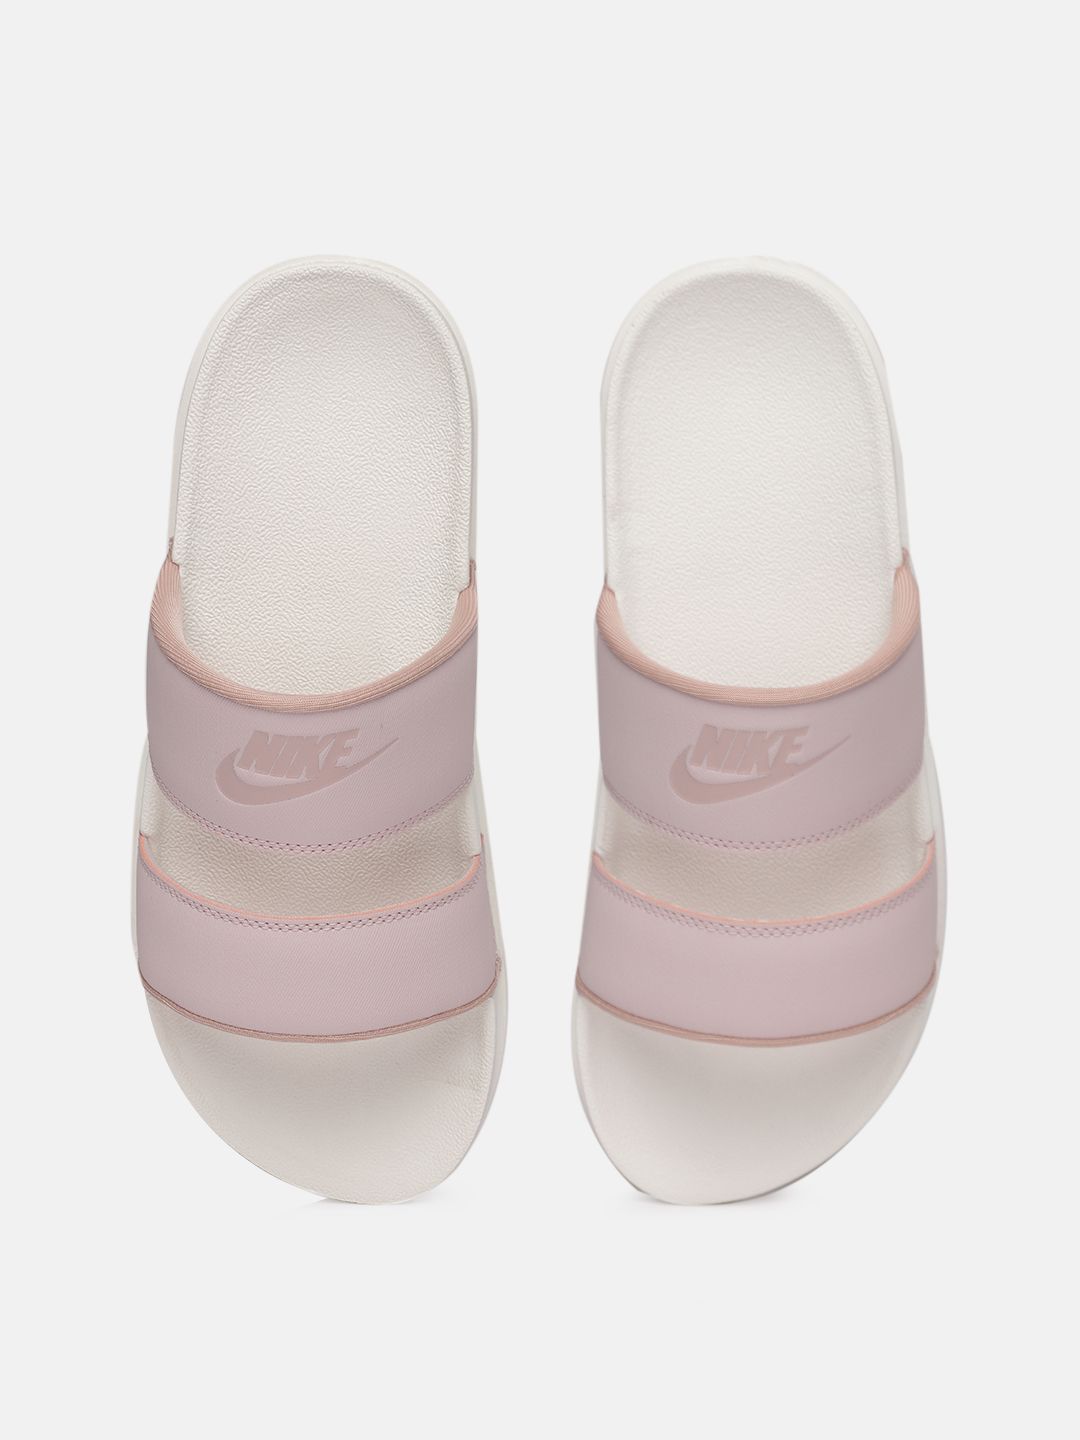 Nike Women Pink Solid Flip-Flops Price in India